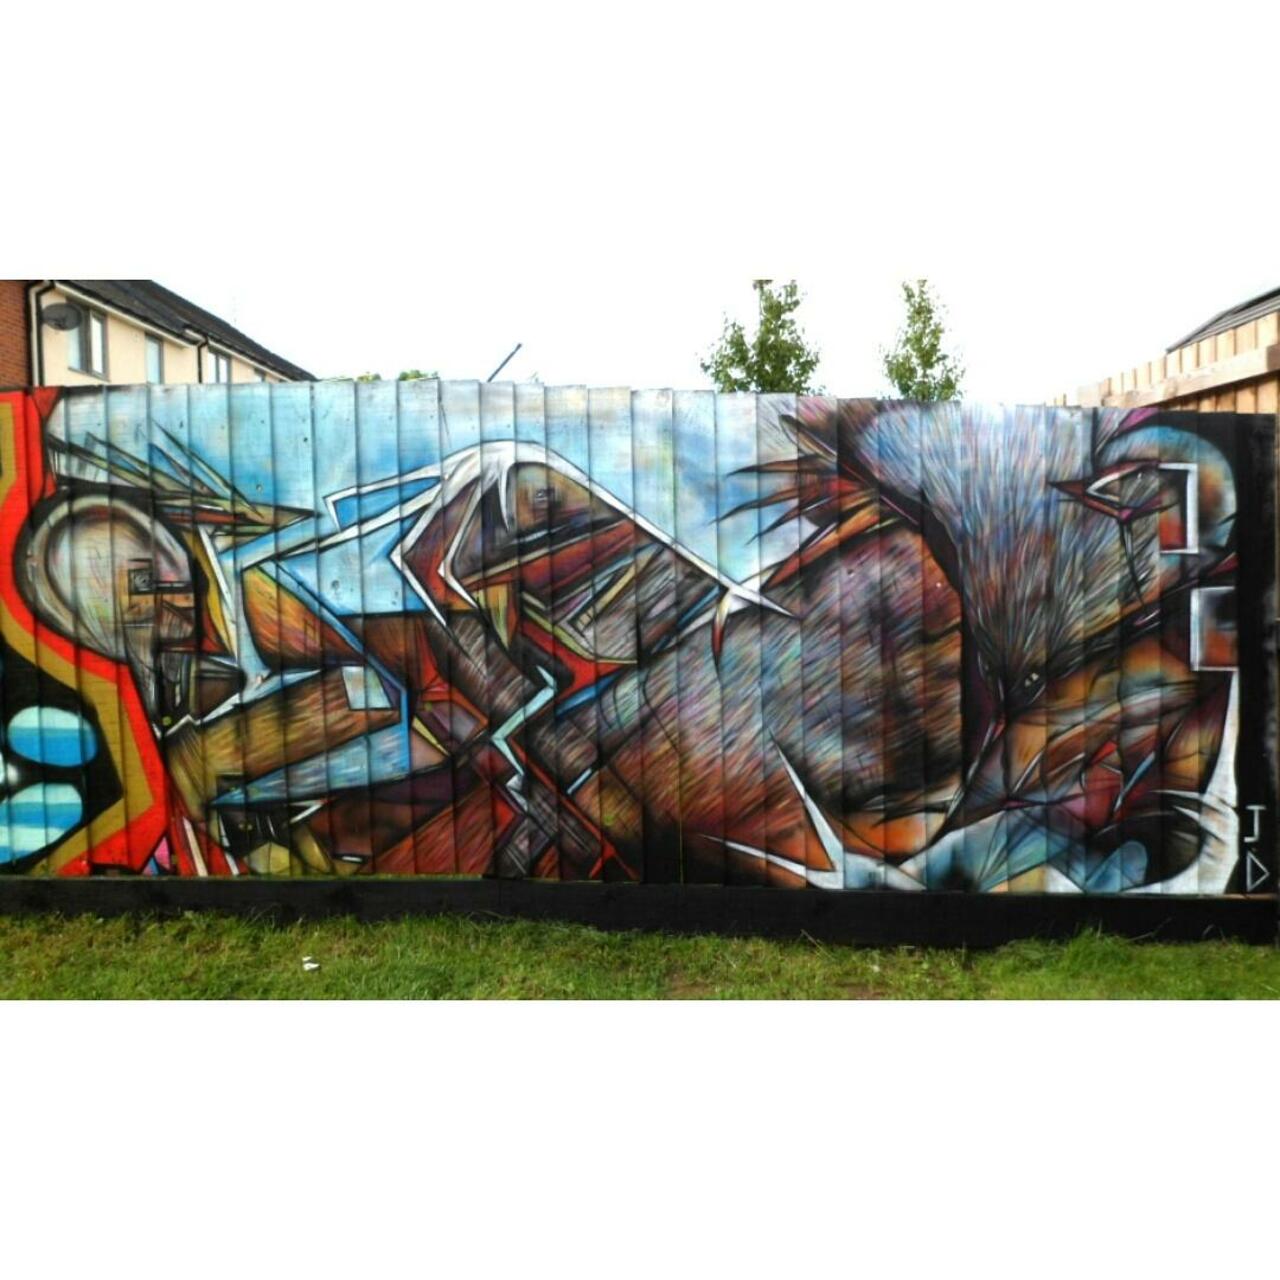 RT @jdaviesarts: Garden commission. Spray paint. 2012. JD. #contemporarypainting #painting #art #graffiti #streetart #culture #artist http://t.co/GHJ14ibvED